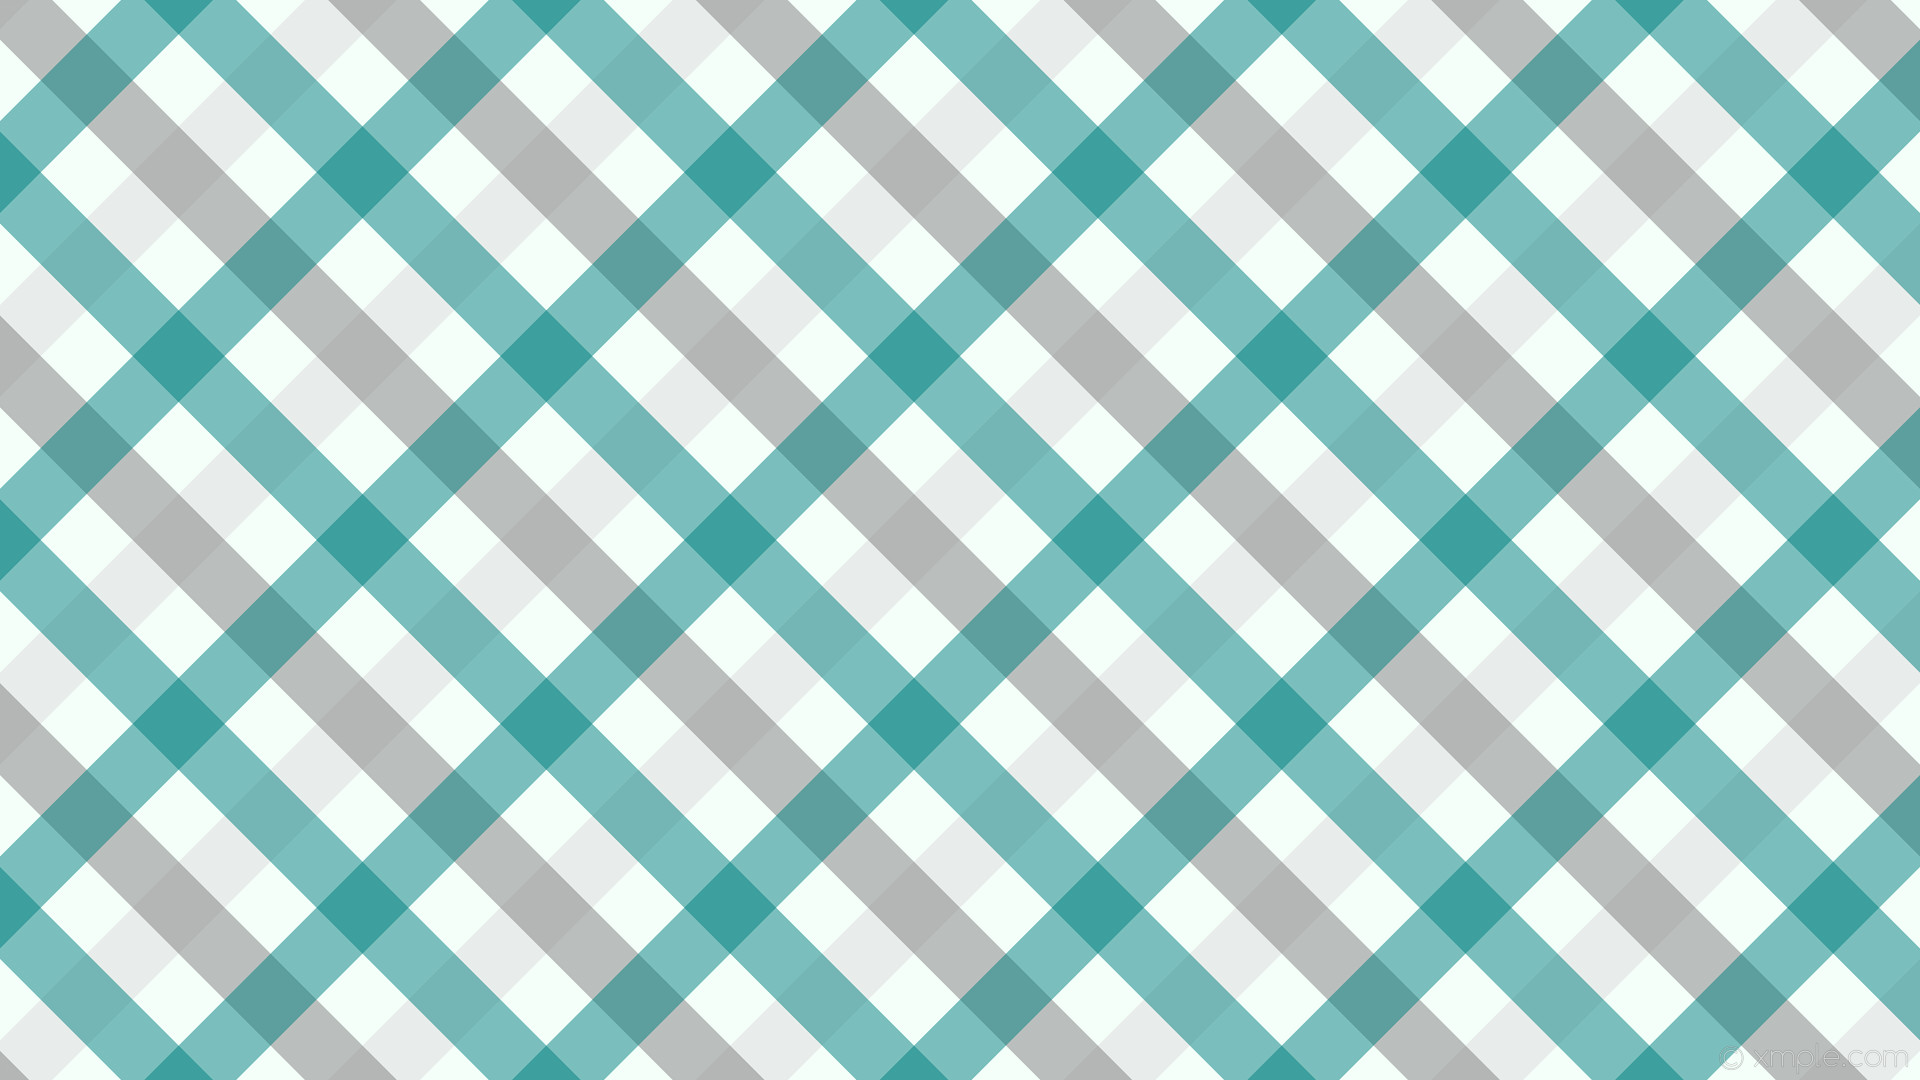 1920x1080 wallpaper white green striped grey gingham quad mint cream gainsboro gray  teal #f5fffa #dcdcdc